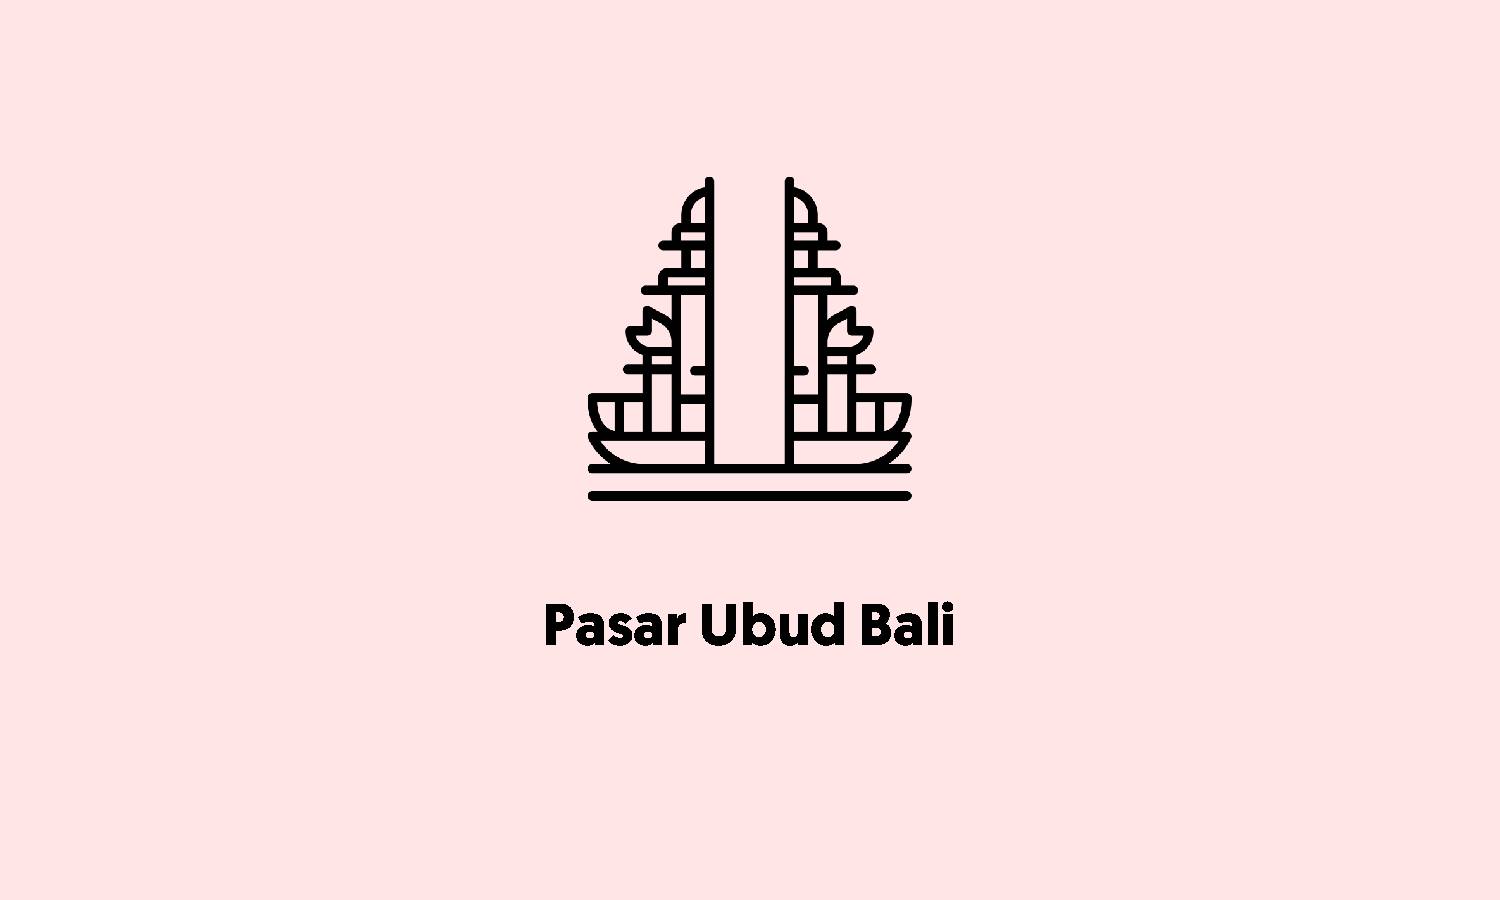 Pasar Ubud Bali